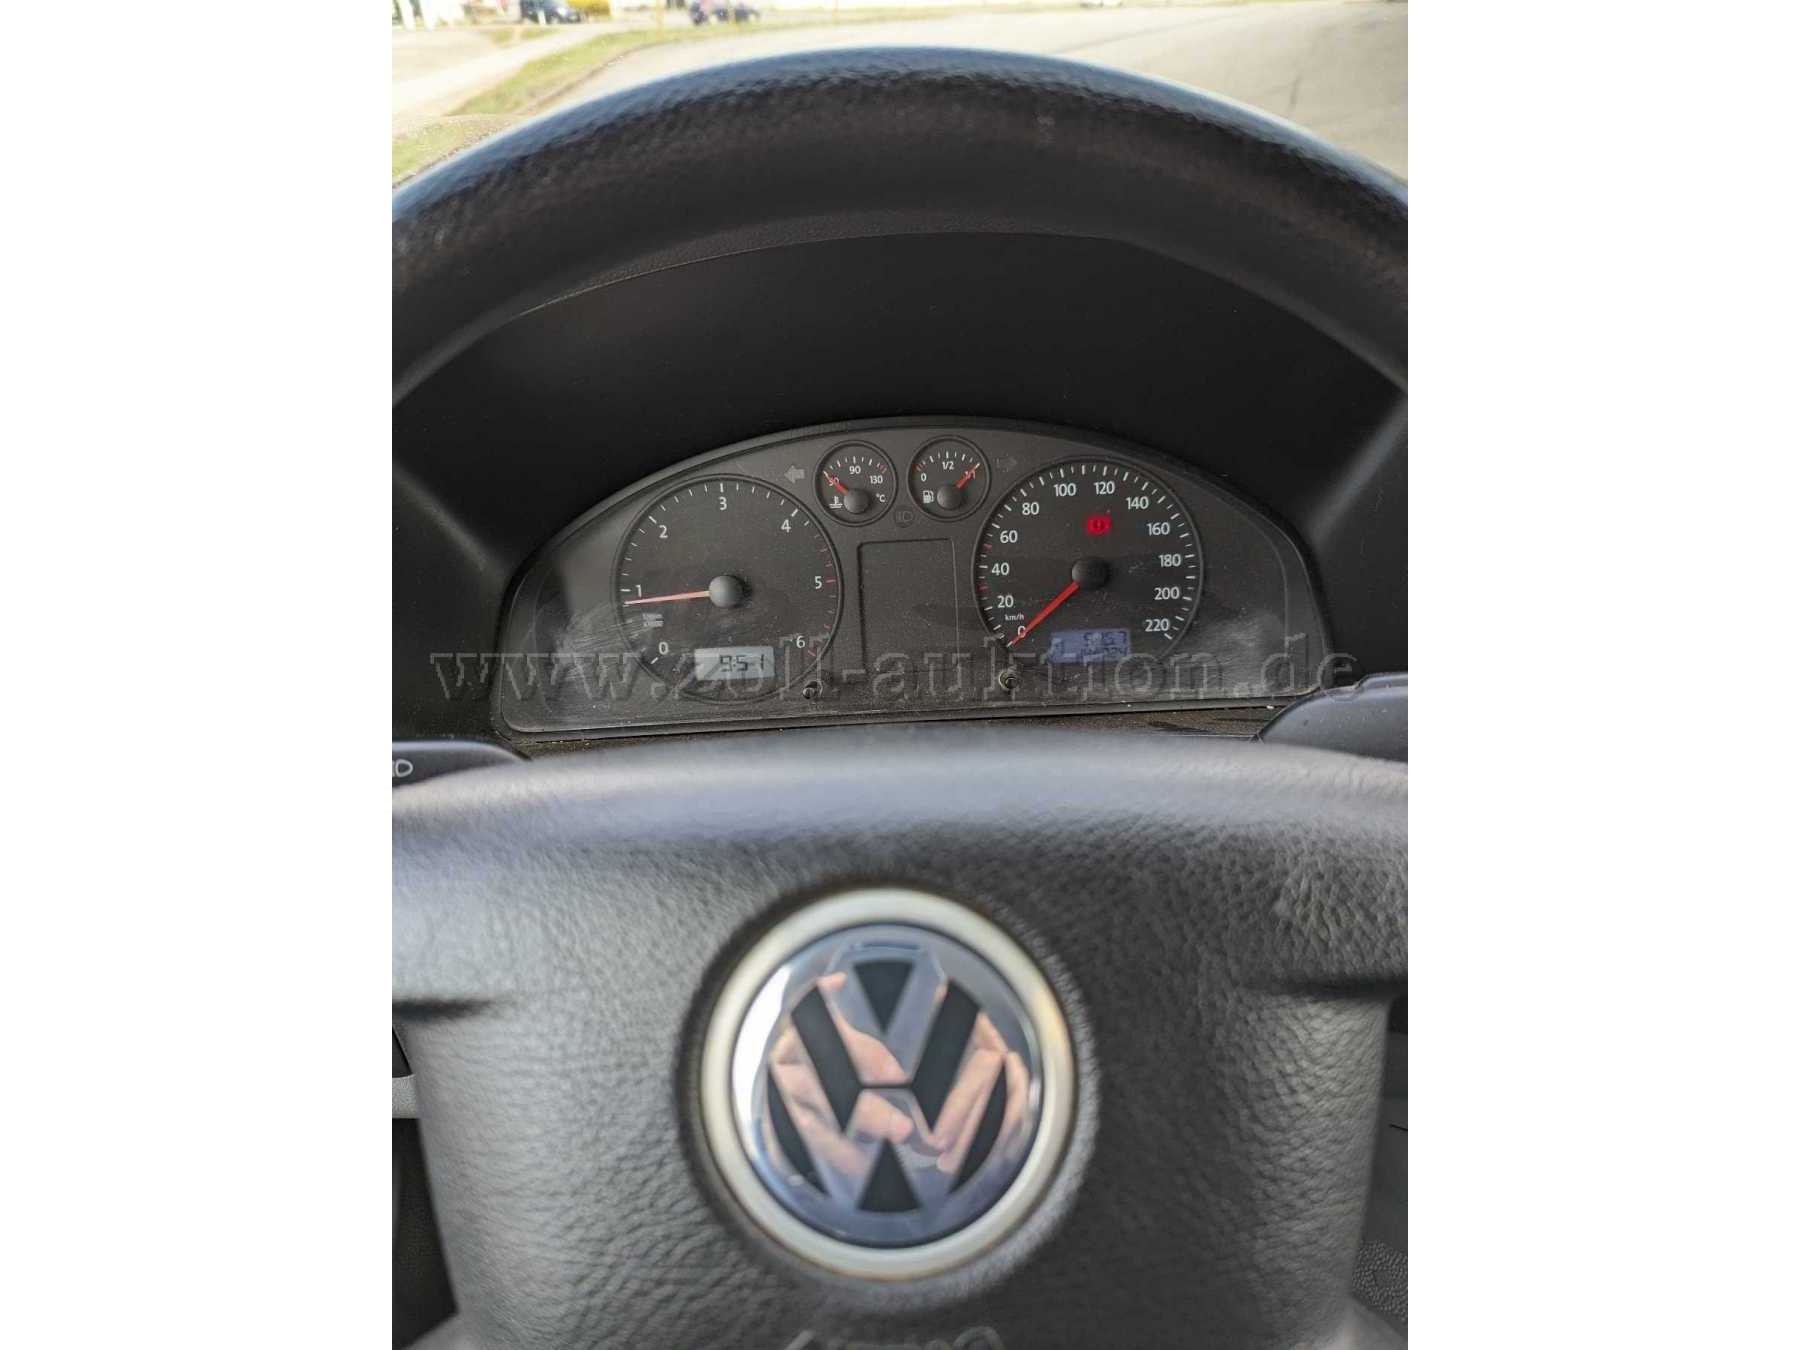 VW-Transporter
Kilometerstand